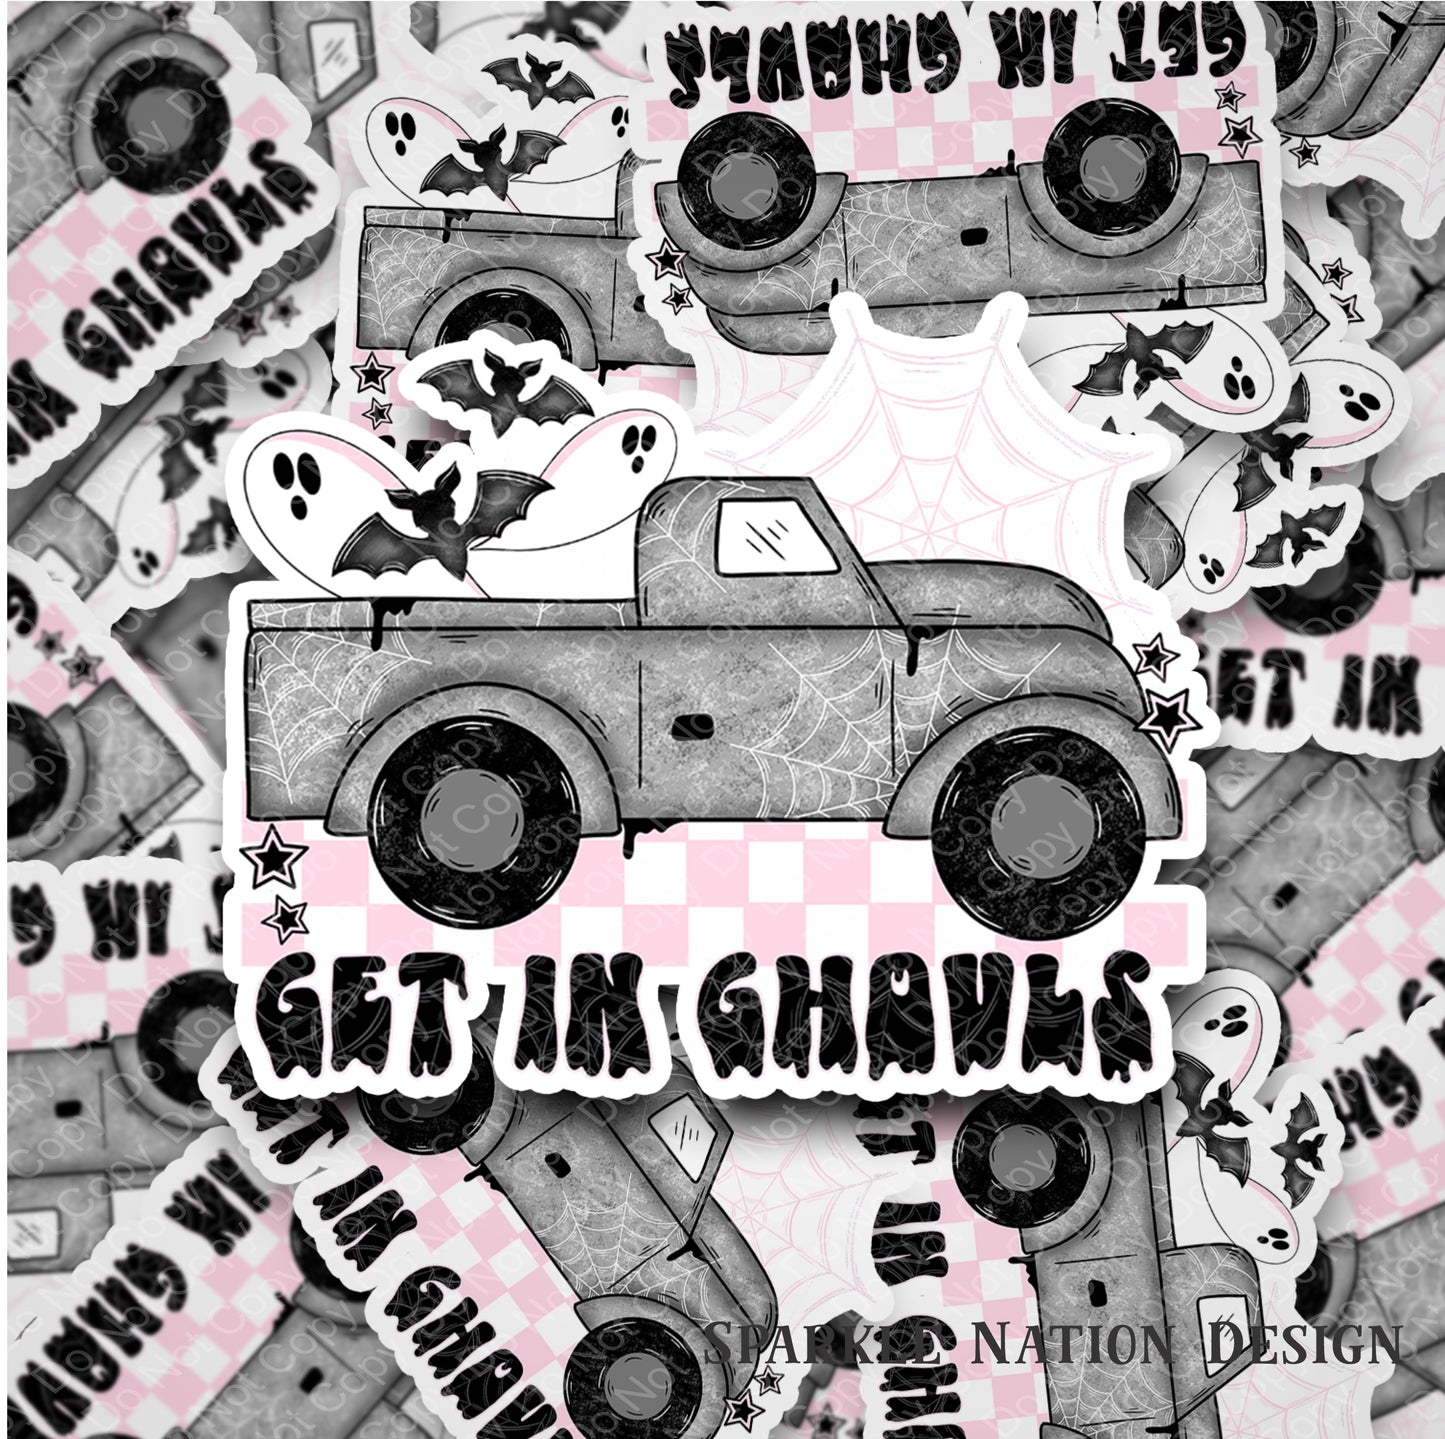 Get in Ghouls Truck Ghost Sticker